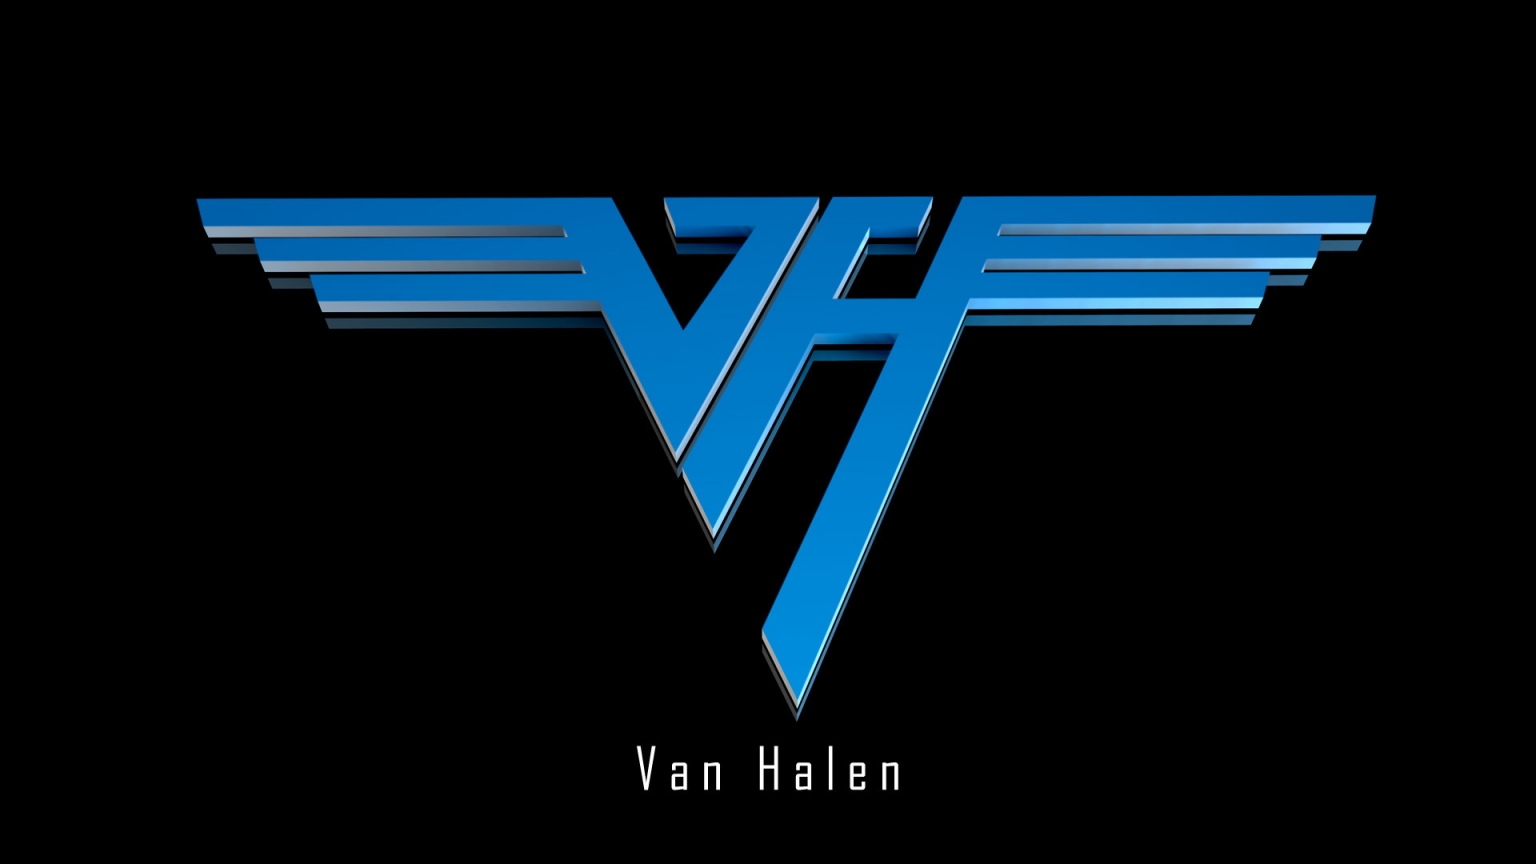 The Van Halen Logo for 1536 x 864 HDTV resolution